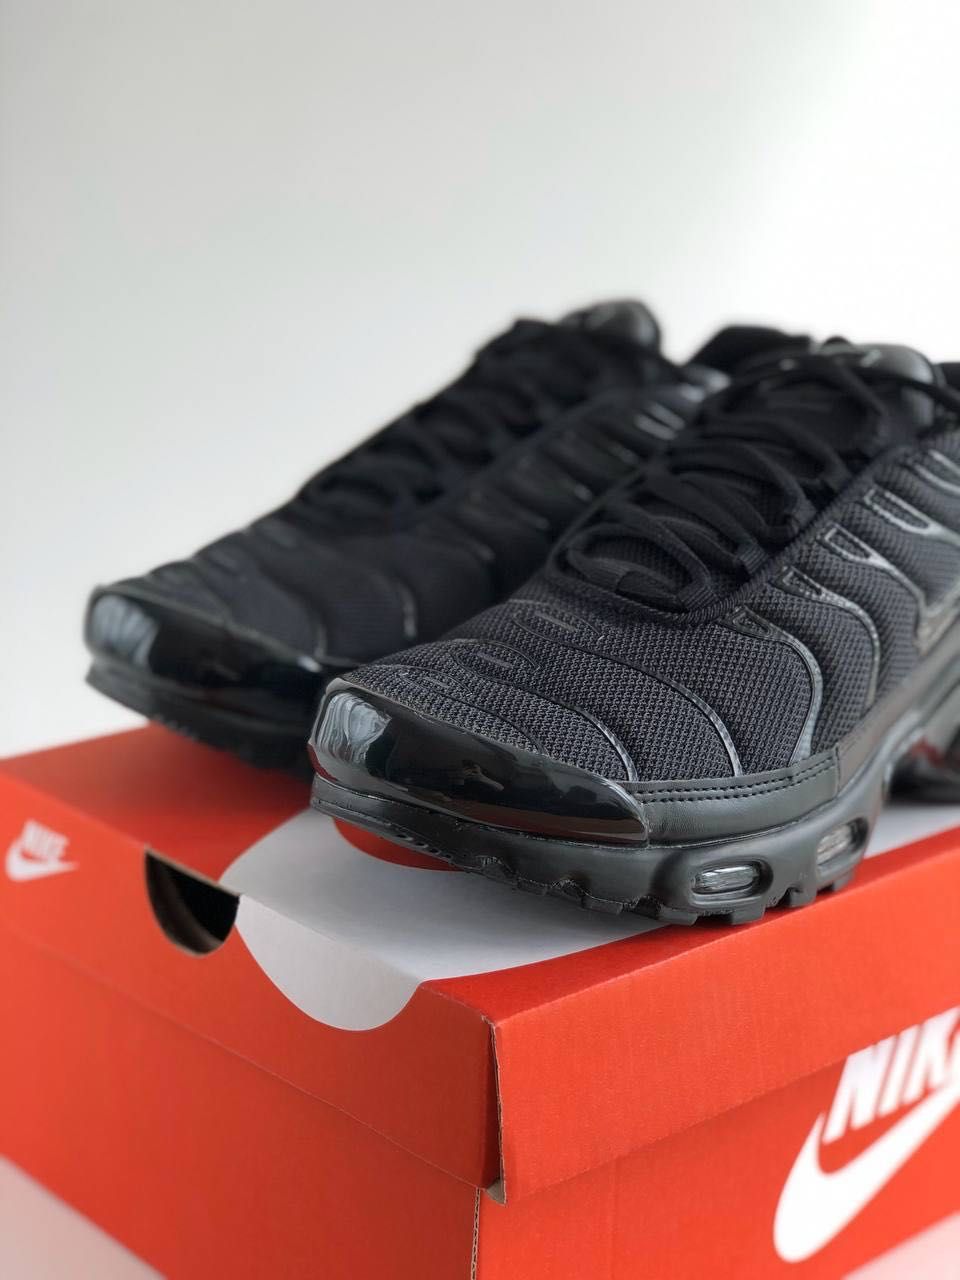 Мужские кроссовки Nike Air Max Tn Plus black. Размеры 39-45